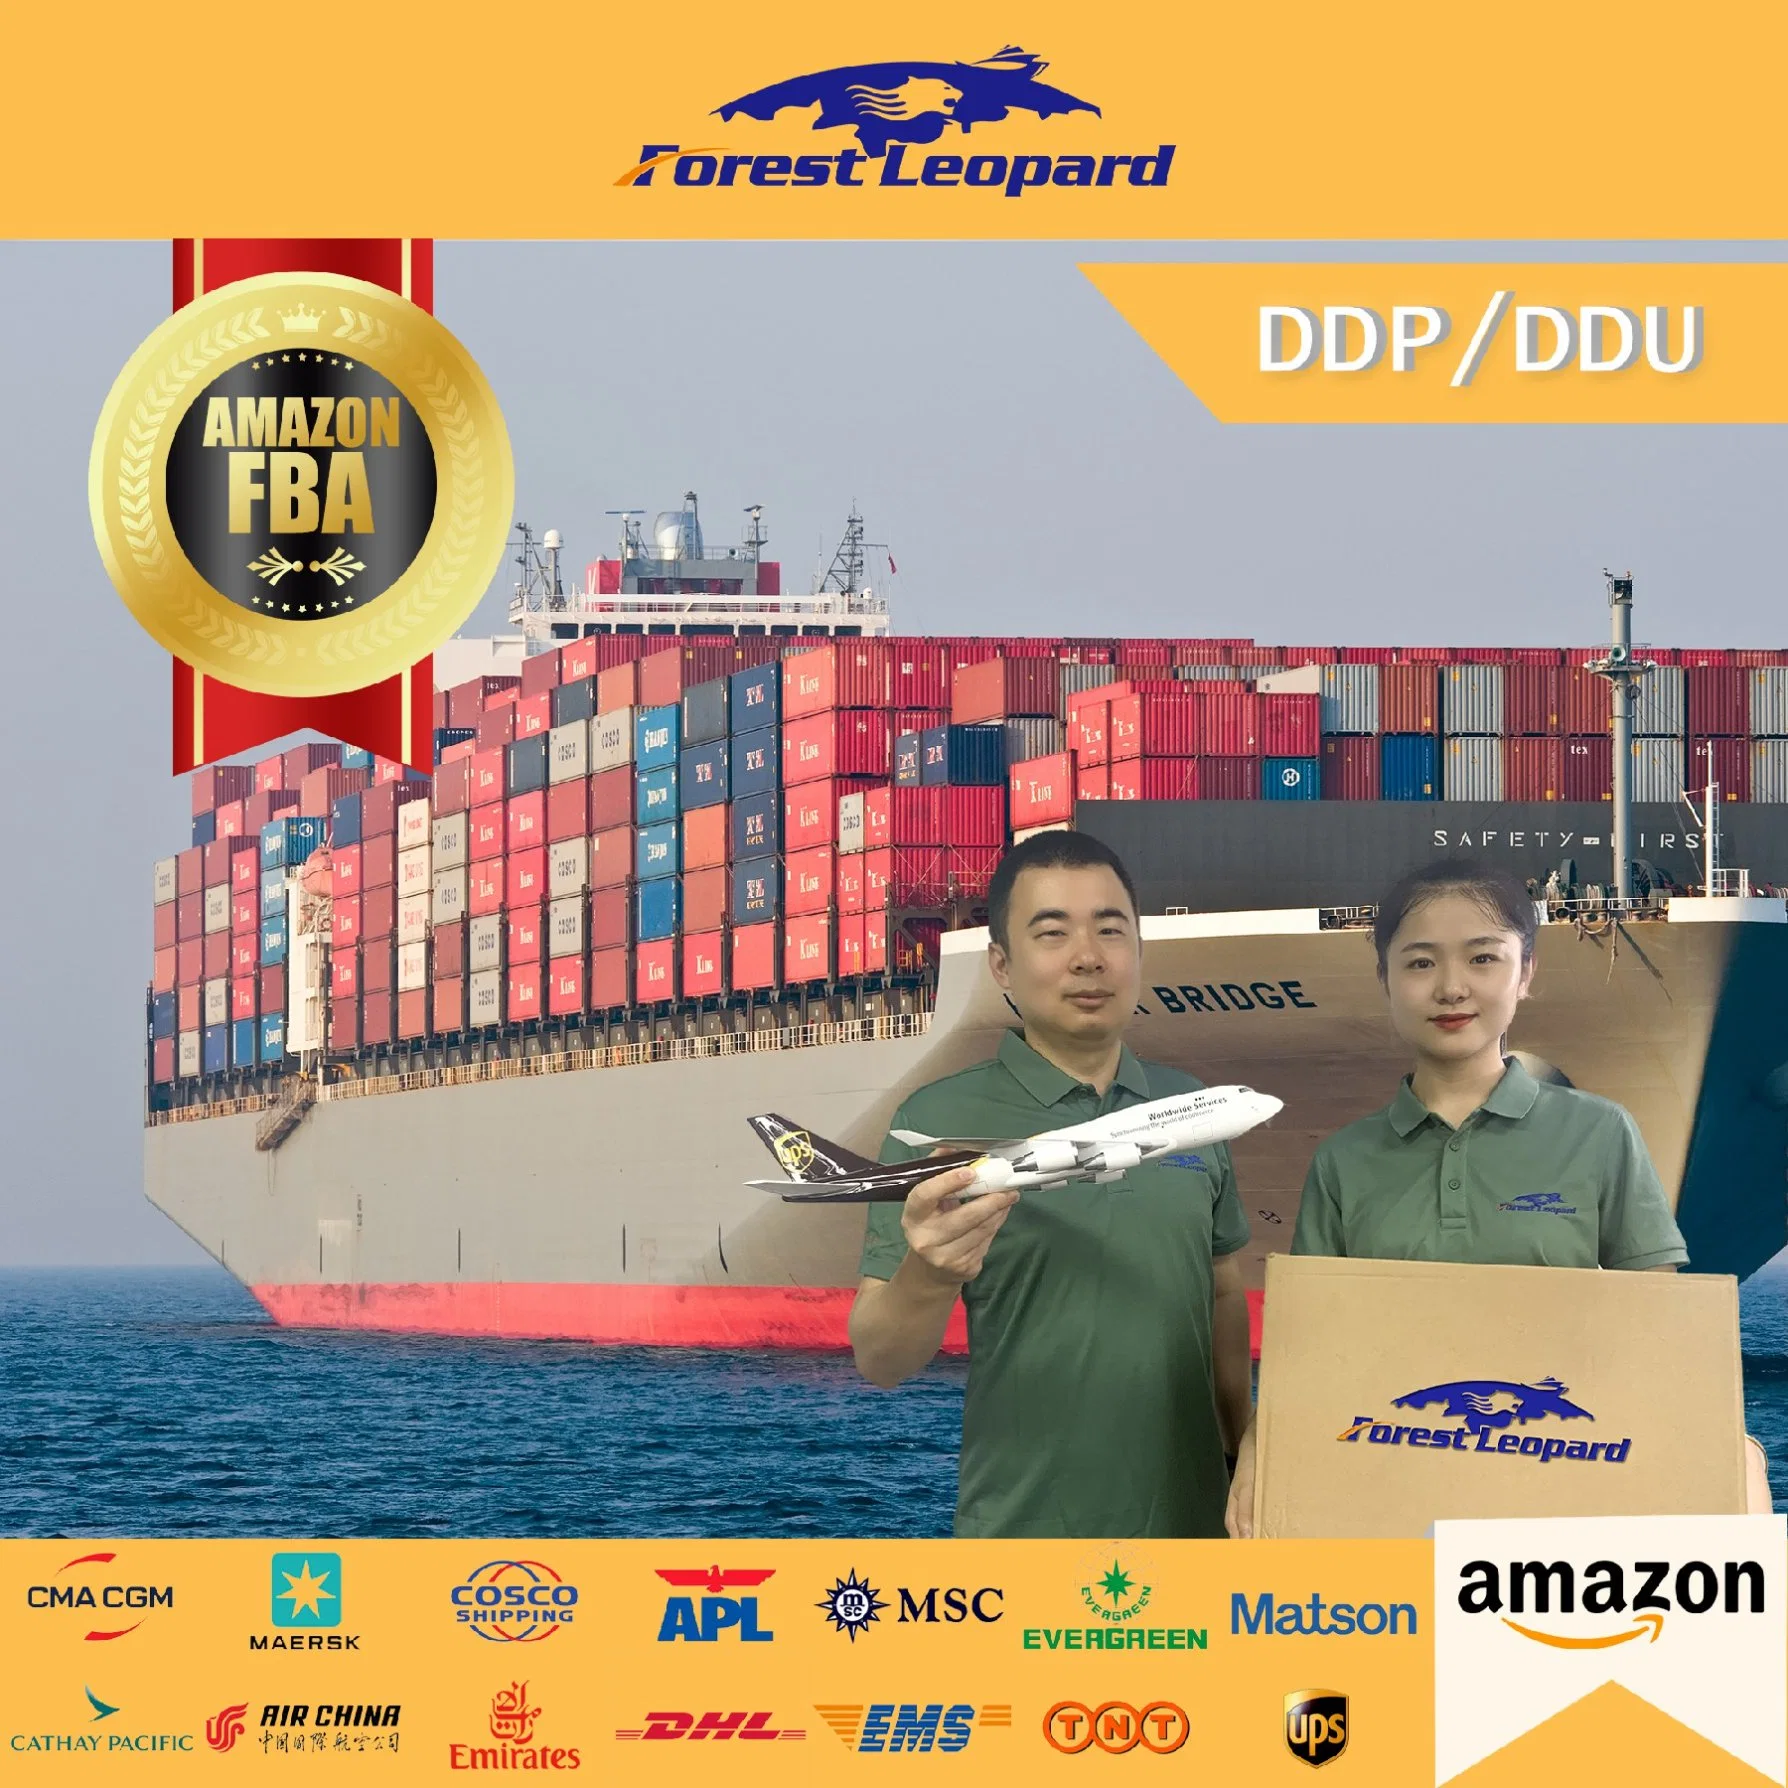 Sea Freight Forwarder From China to USA UK Australia United Kingdom Europe America DDP Fba Amazon Shipping Forestleopard